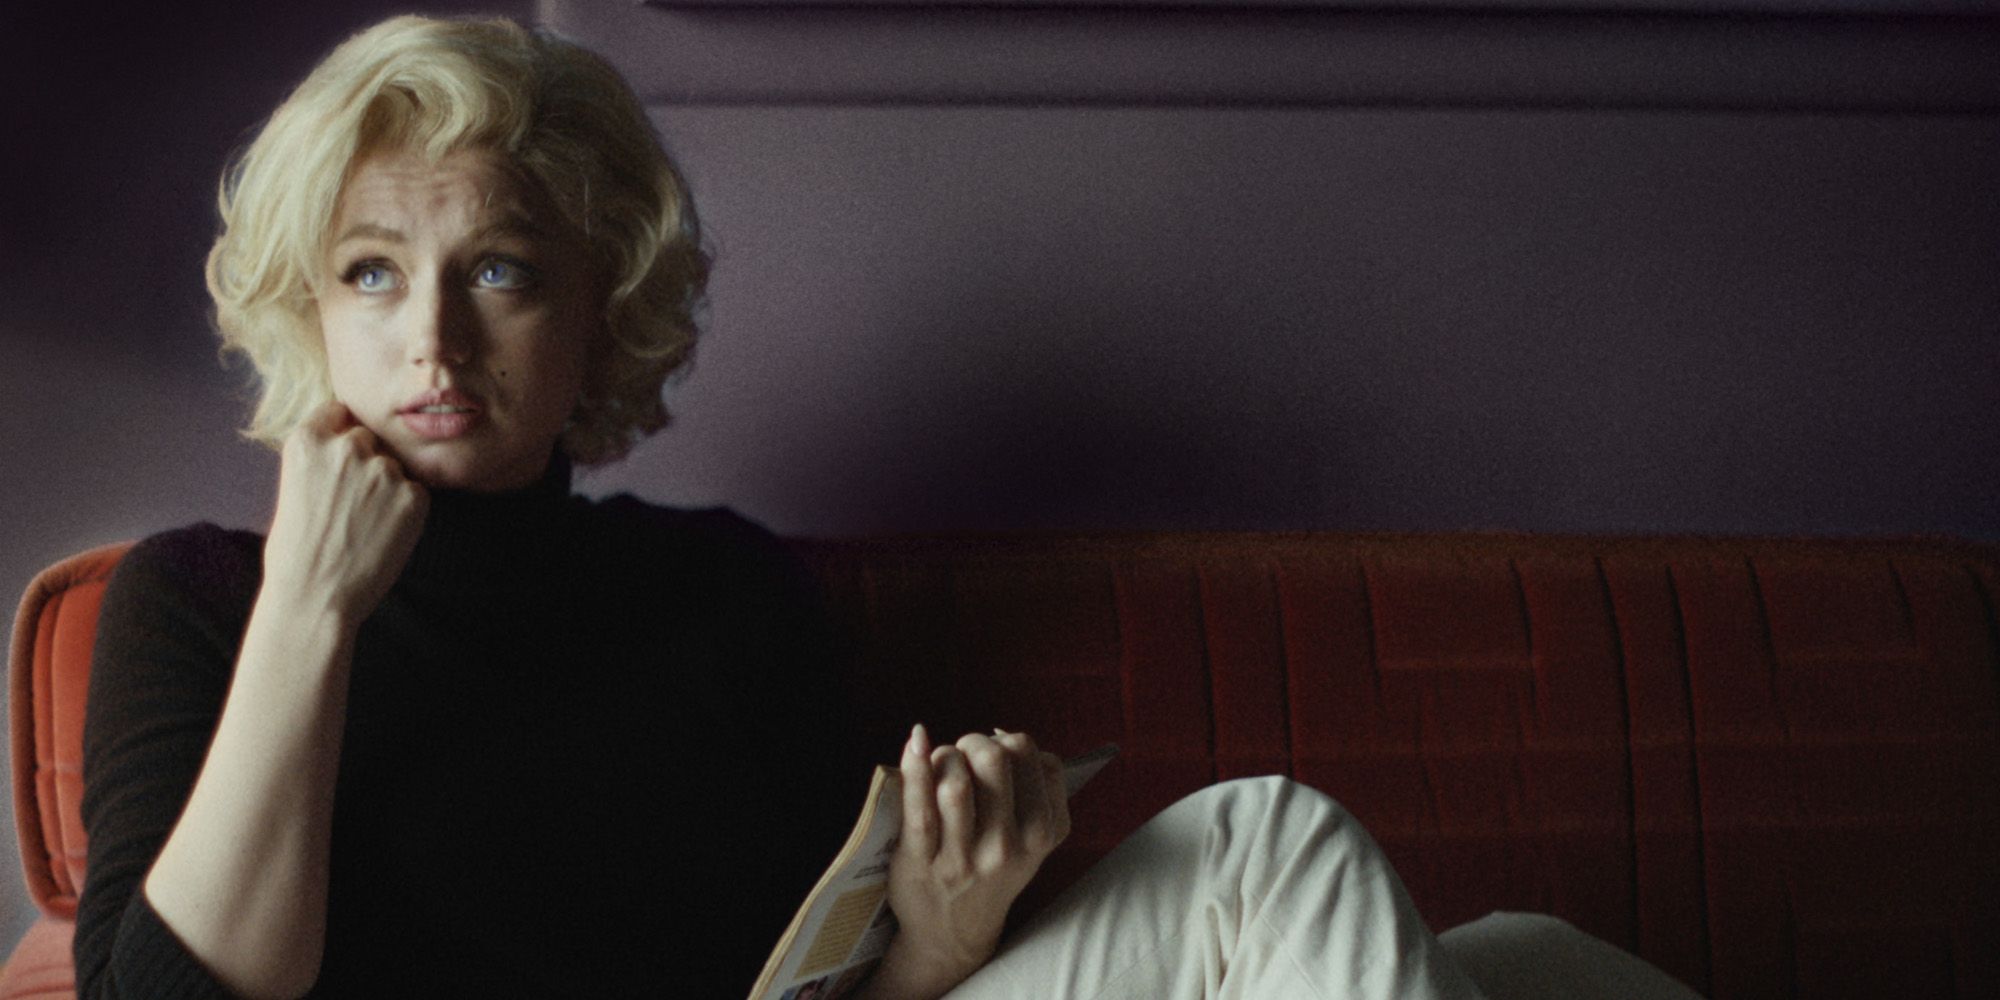 Ana de Armas as Marilyn Monroe on a sofa in Blonde